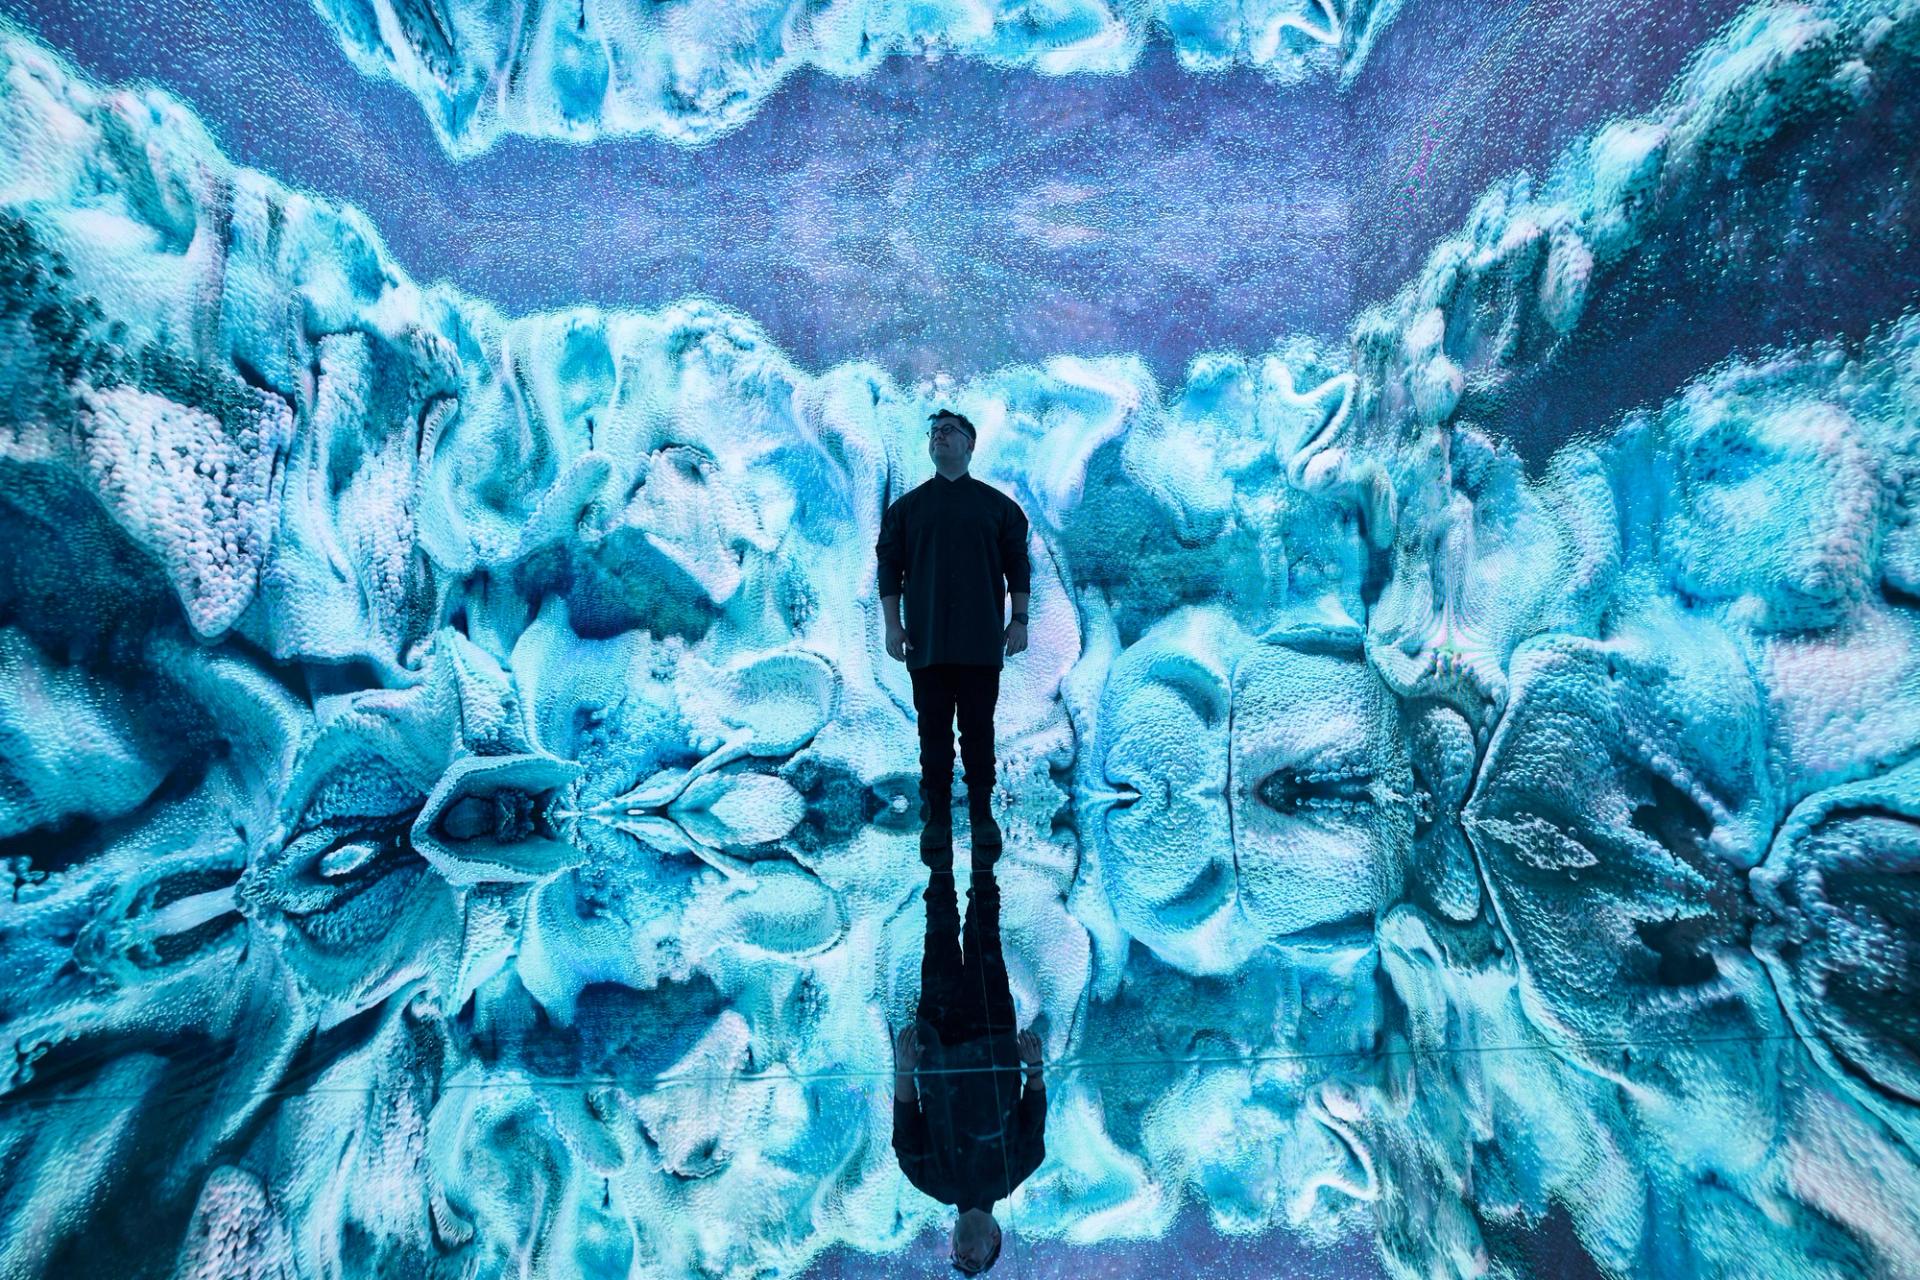 Artist Refik Anadol has created a new immersive installation Glacier Dreams in the Julius Bär Lounge at Art Dubai 2023